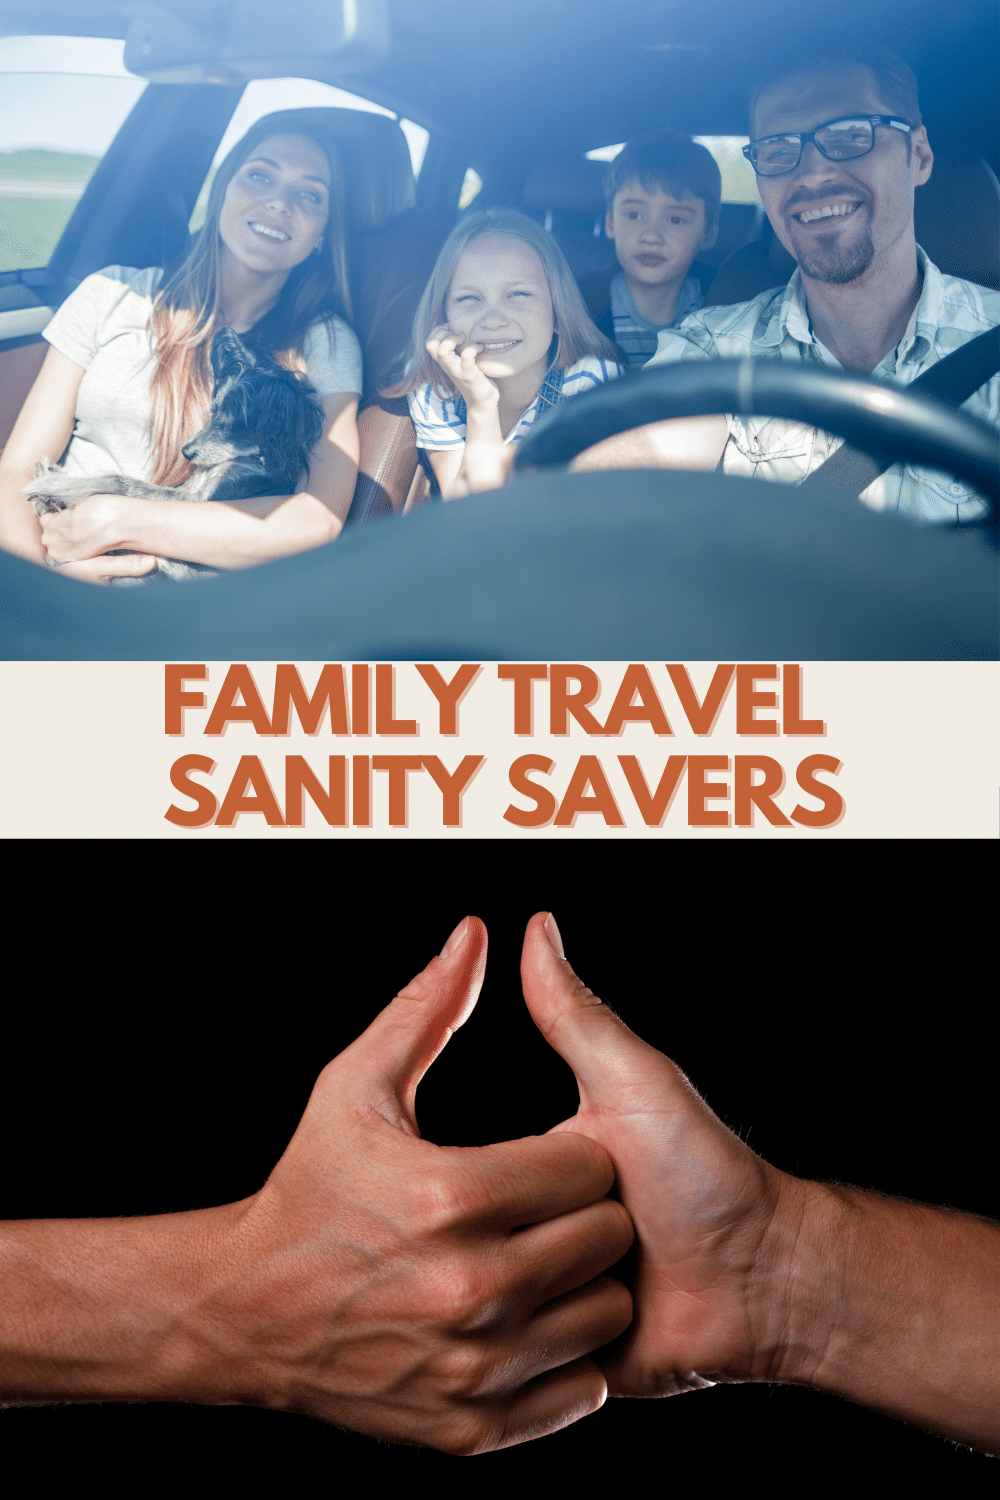 Family travel can be stressful. Family travel sanity savers will save your sanity, help your family grow closer & make lasting memories. #familytravel #familymemories #familyfun via @wondermomwannab